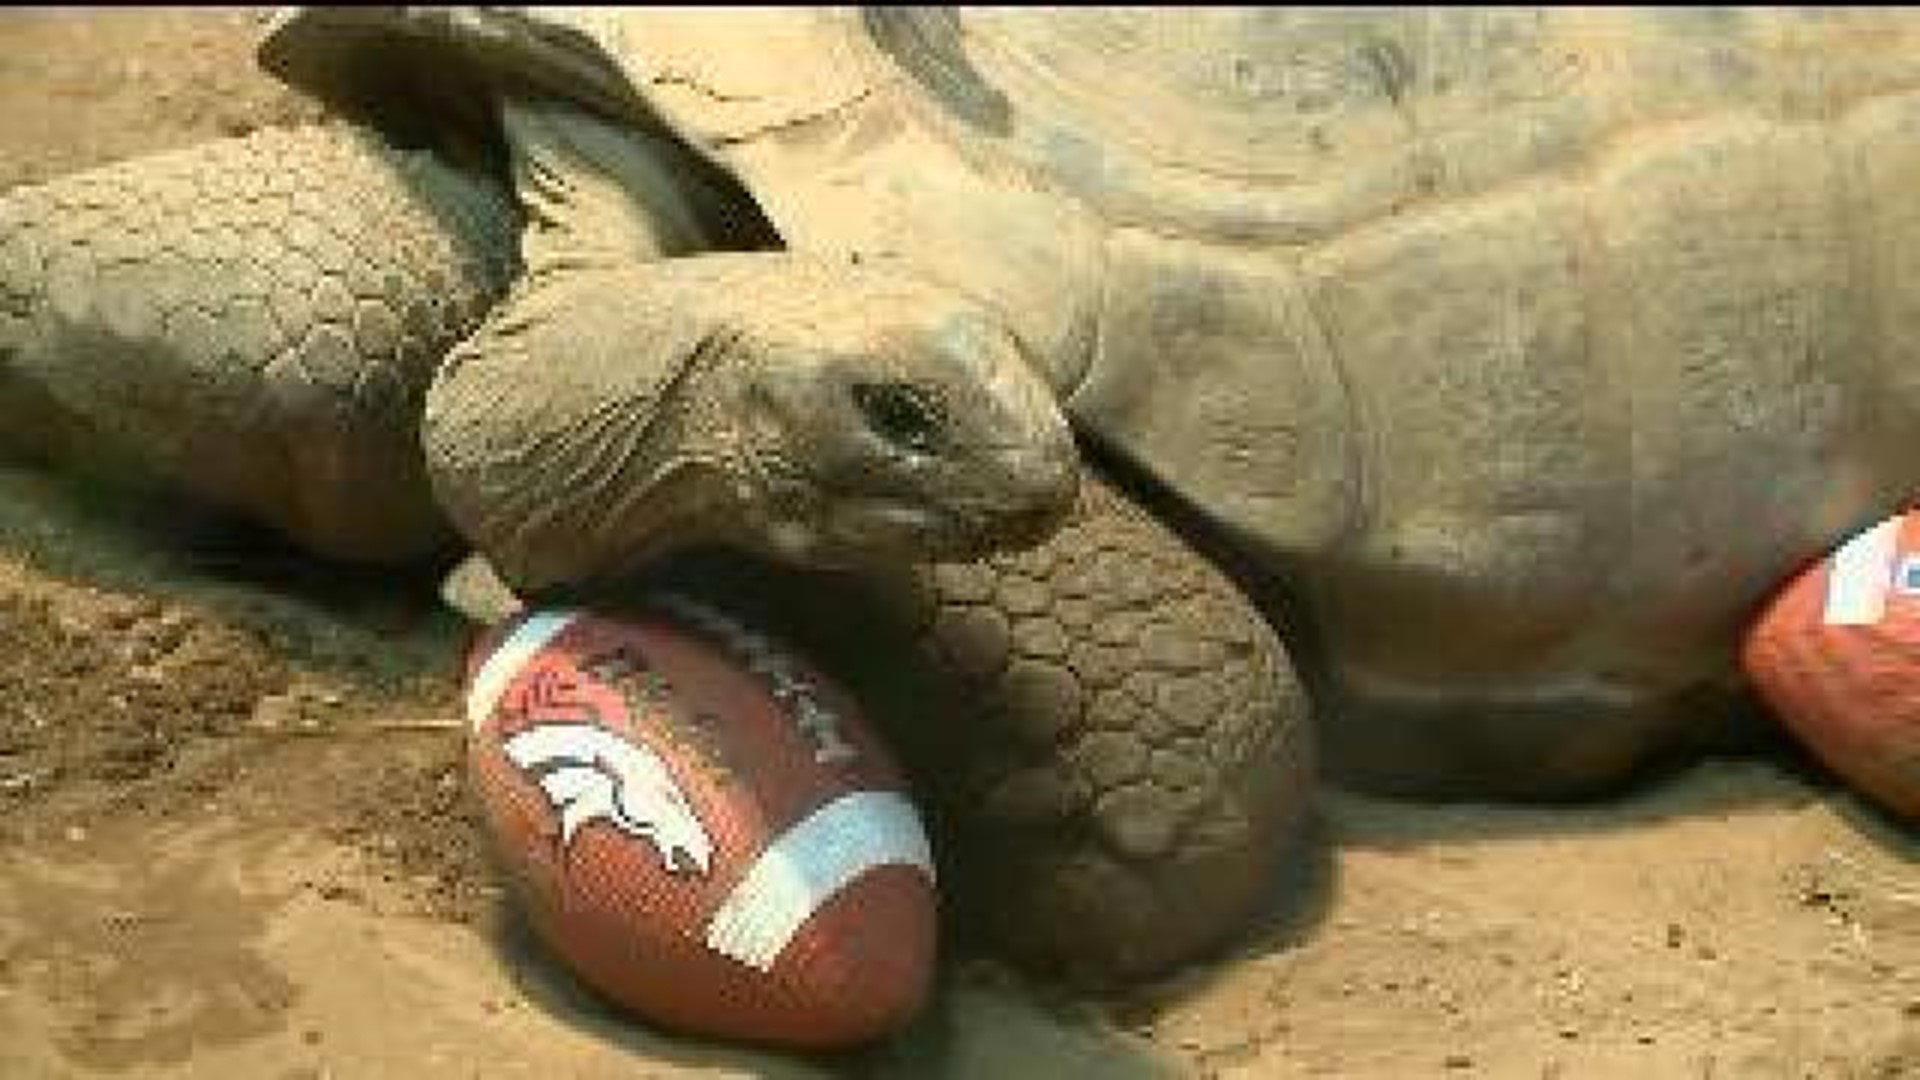 Tortoises Offer Super Bowl Predictions